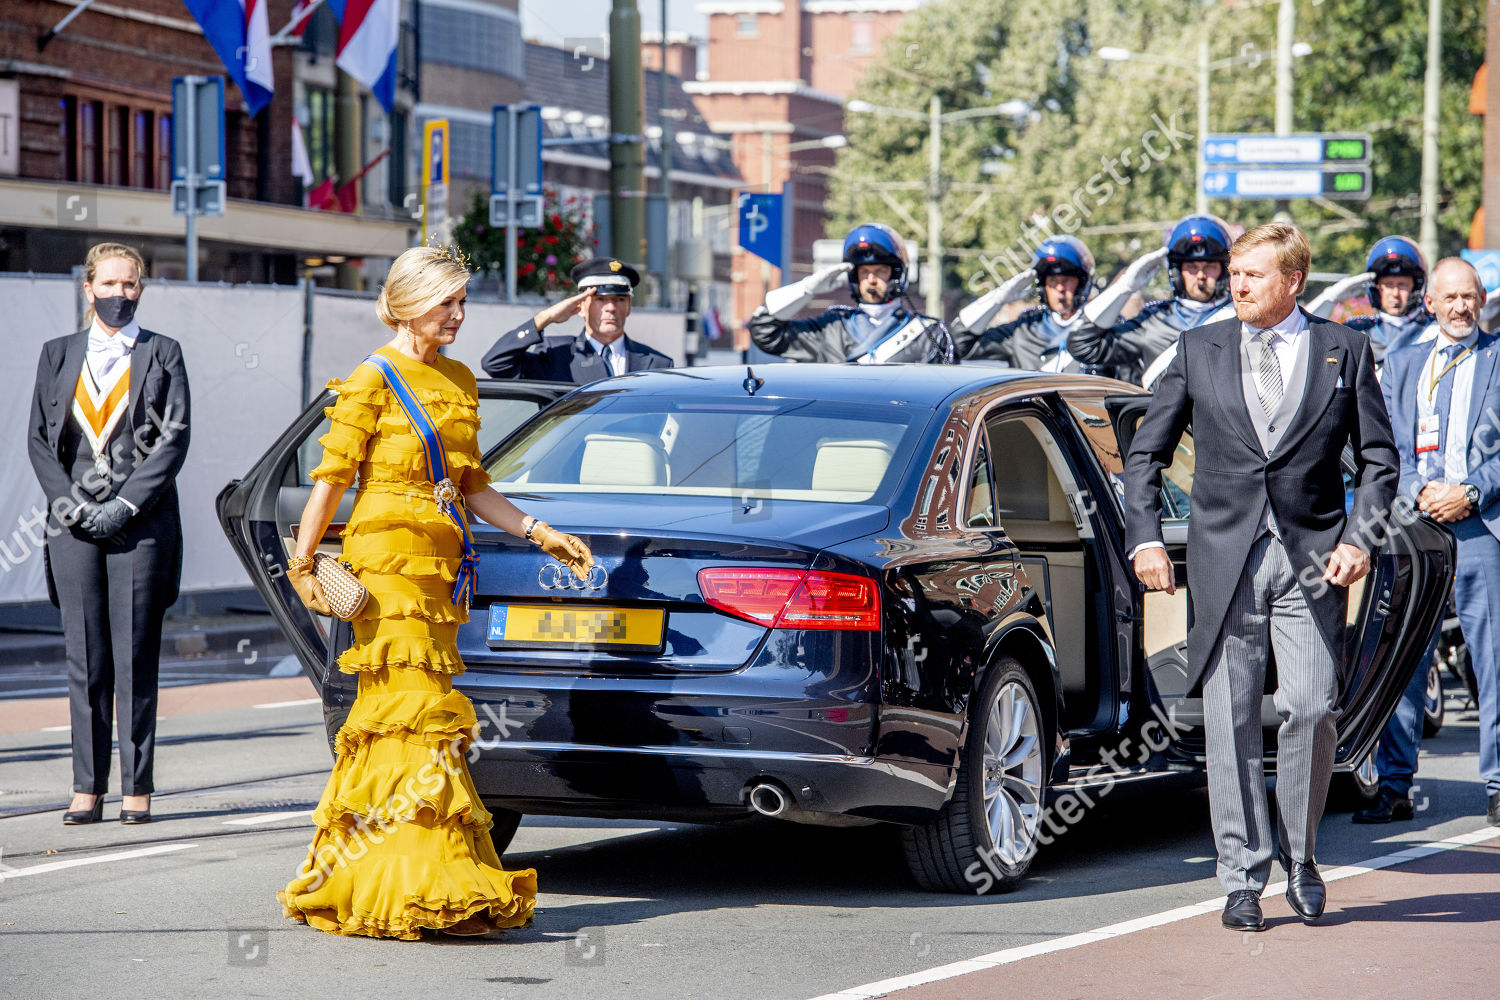 prinsjesdag-ceremony-the-hague-the-netherlands-shutterstock-editorial-10777298k.jpg